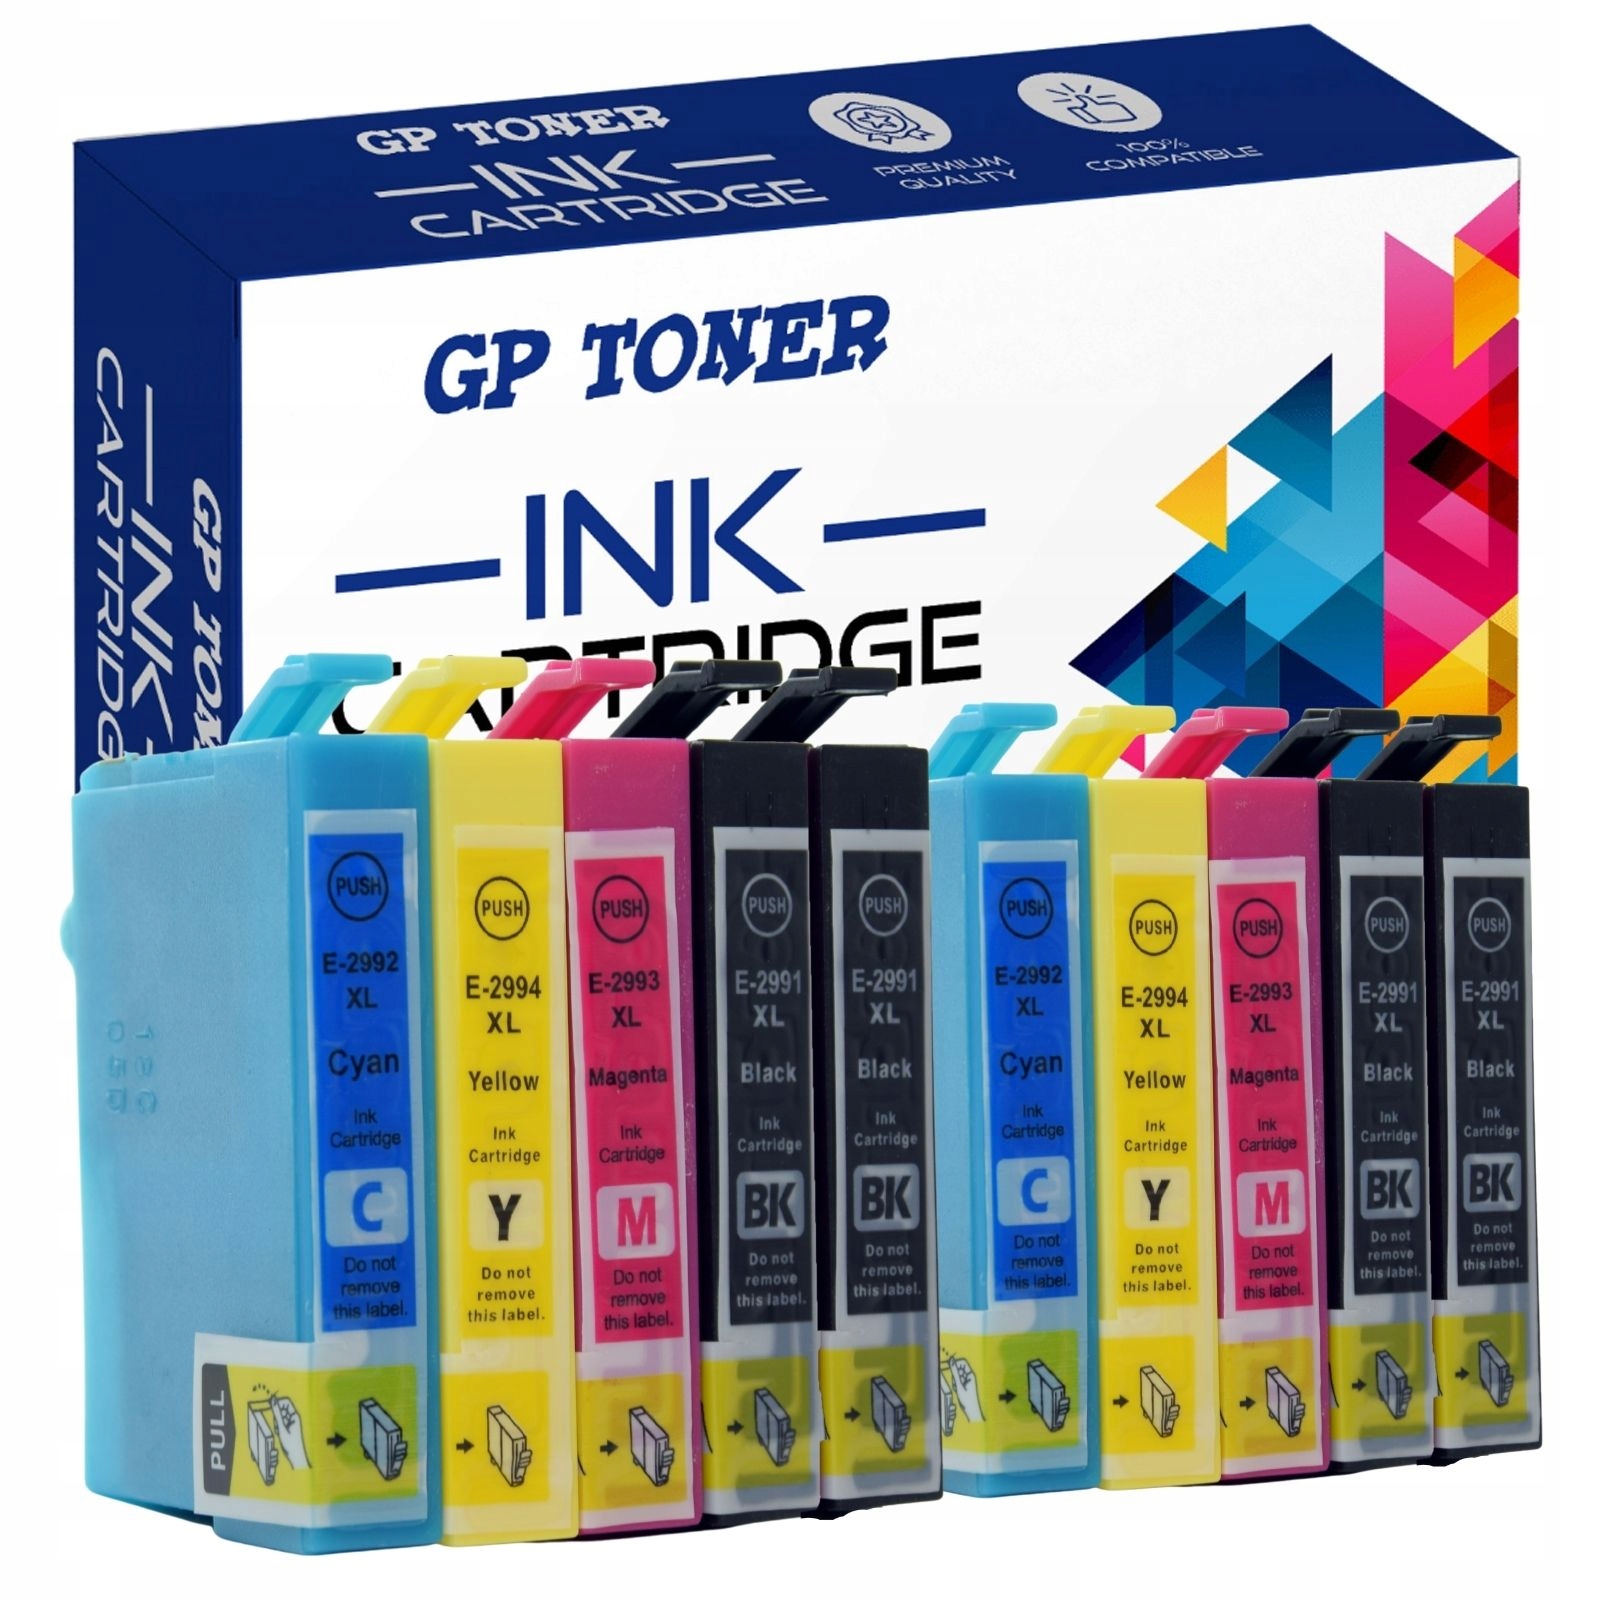 Compatible Epson 603 Super XL Black Ink Cartridge 18ml